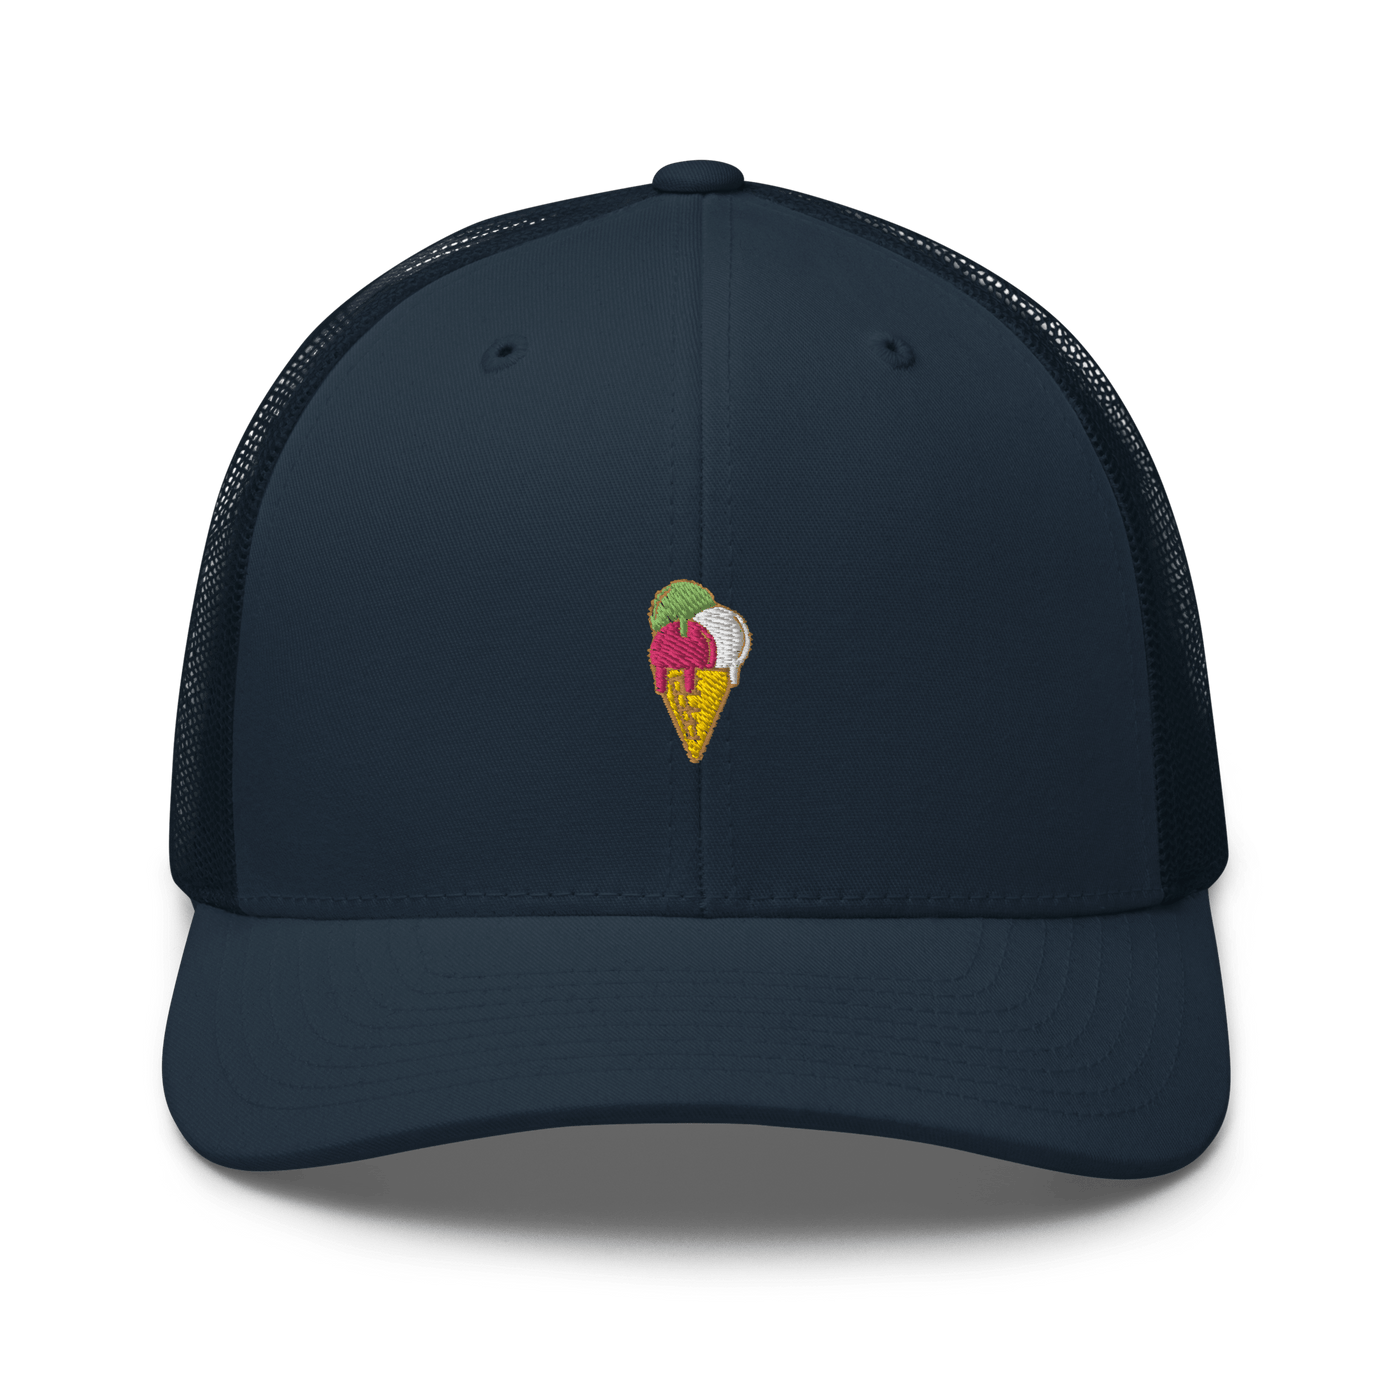 Ice Cream Cone Trucker Cap - Navy - - Just Another Cap Store